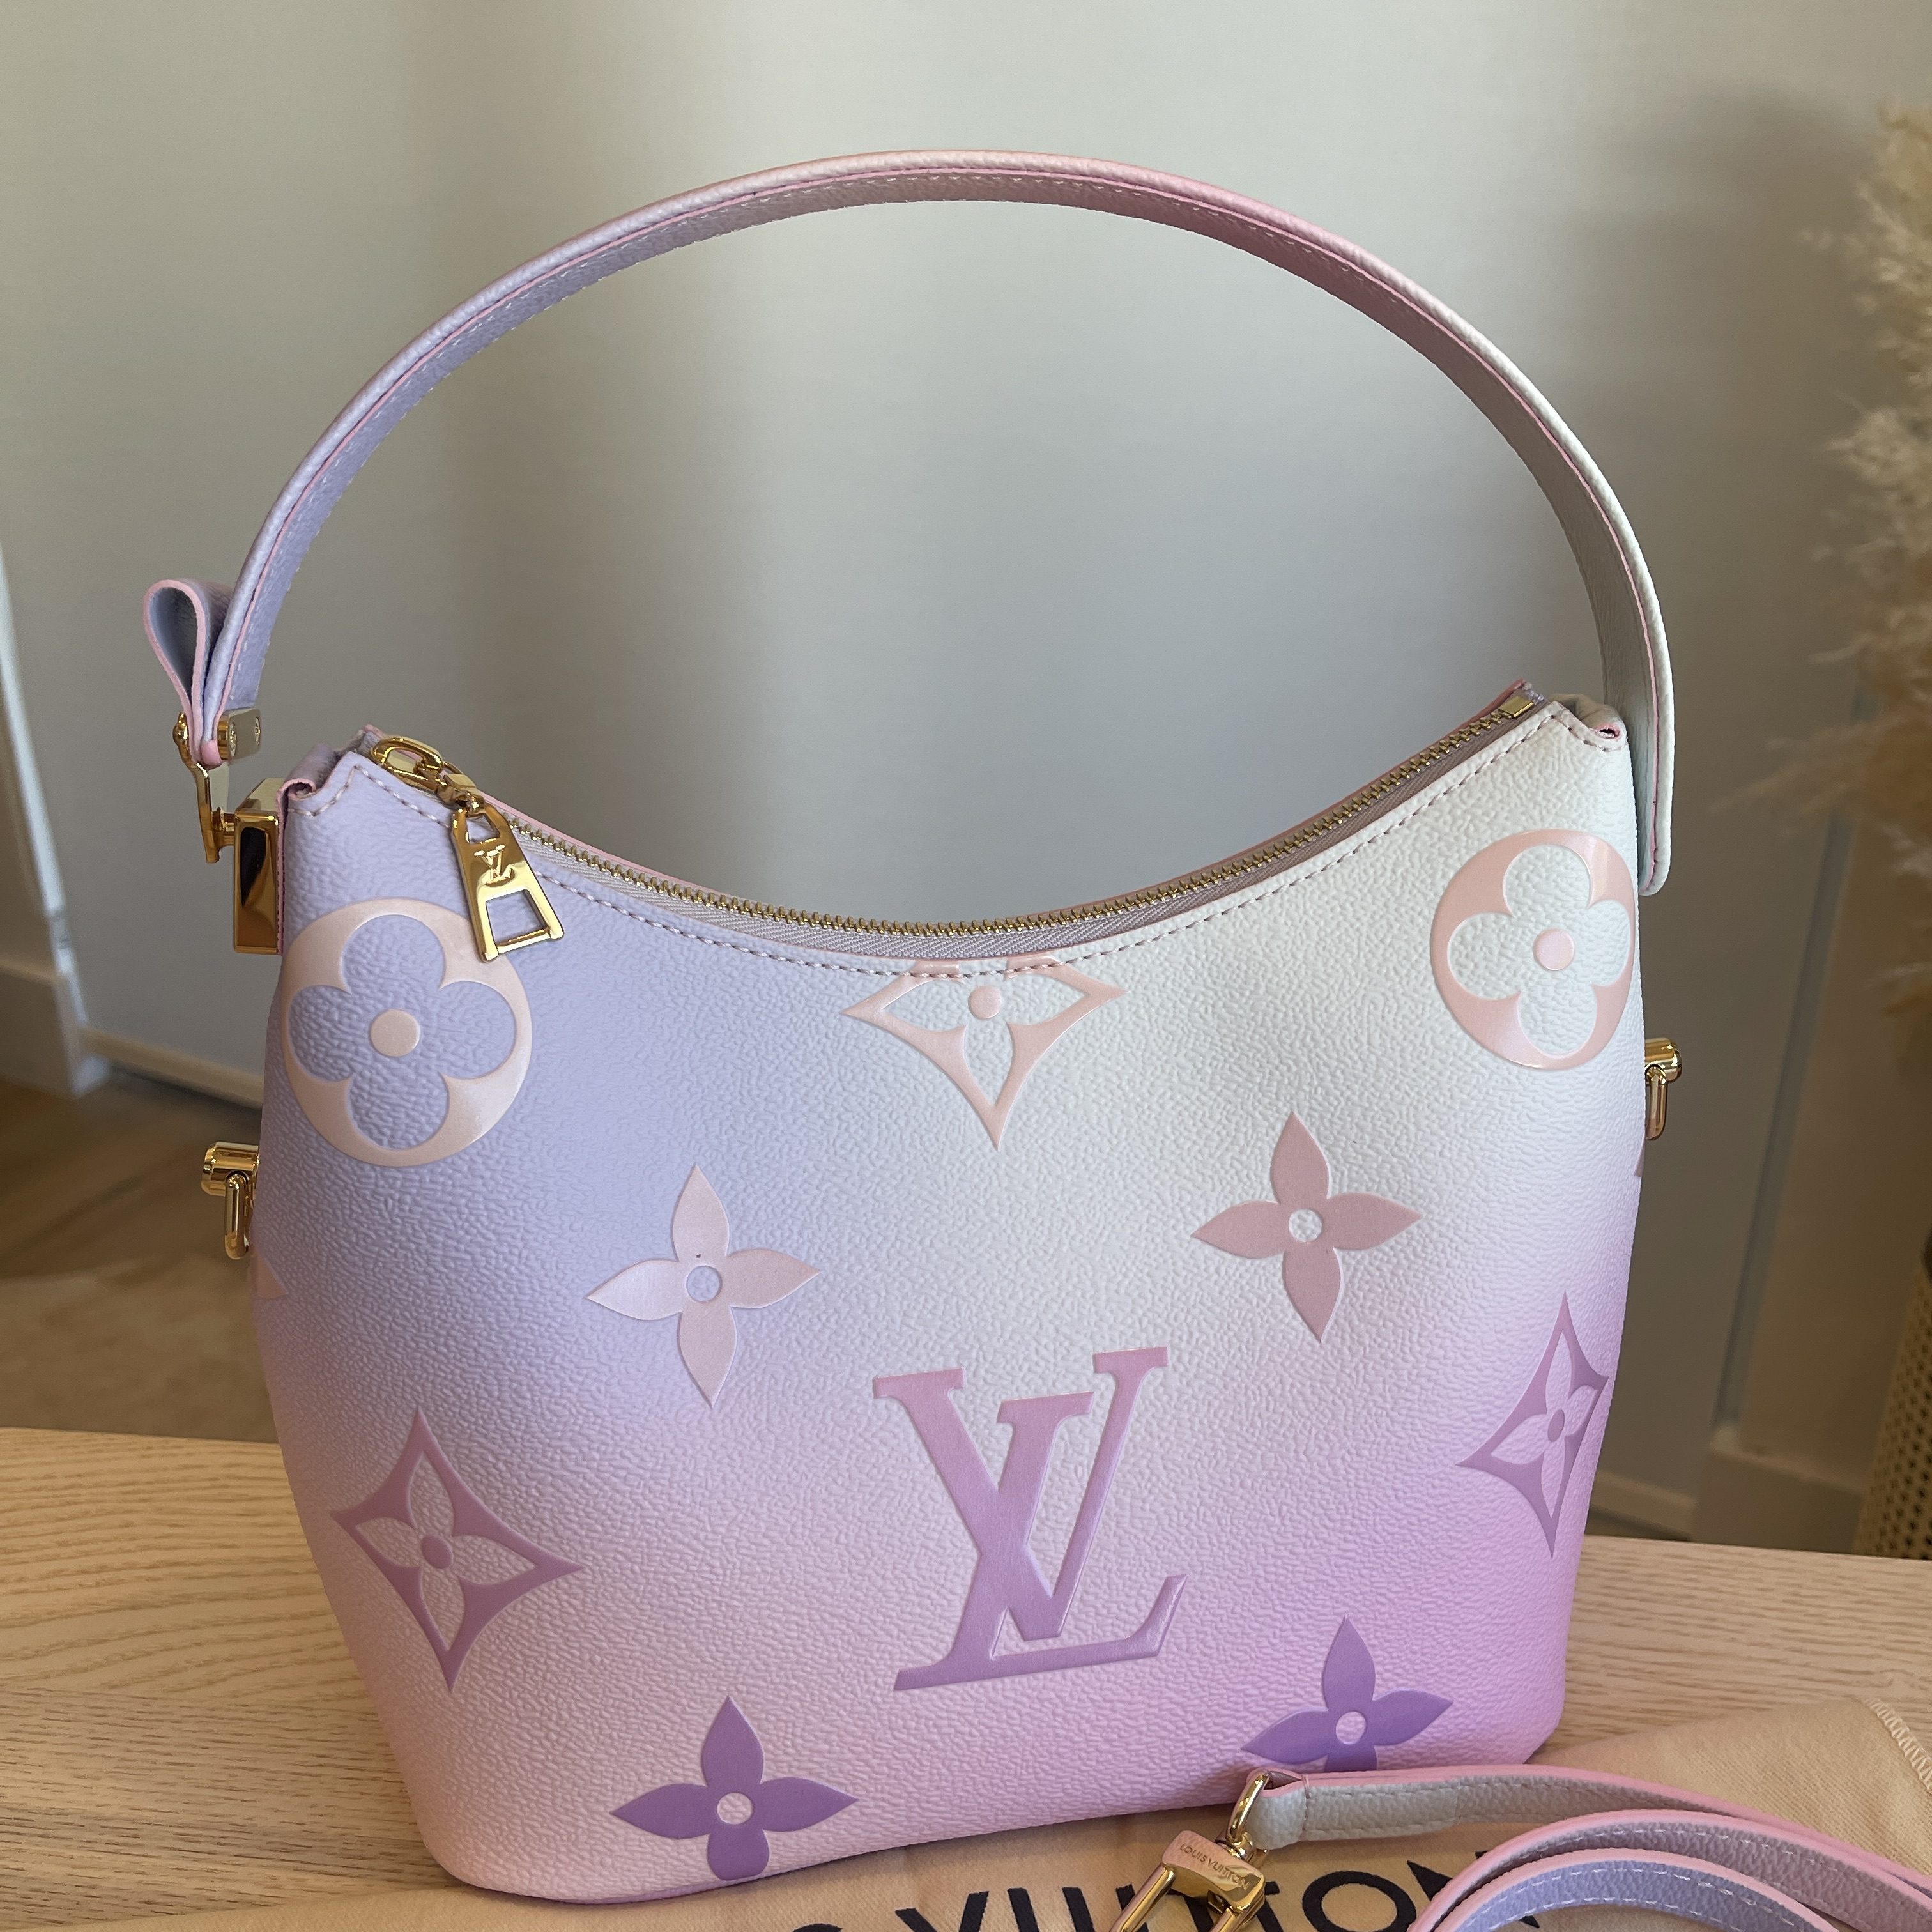 Authentic Louis Vuitton Sunrise Pastel Marshmallow Bag Spring In